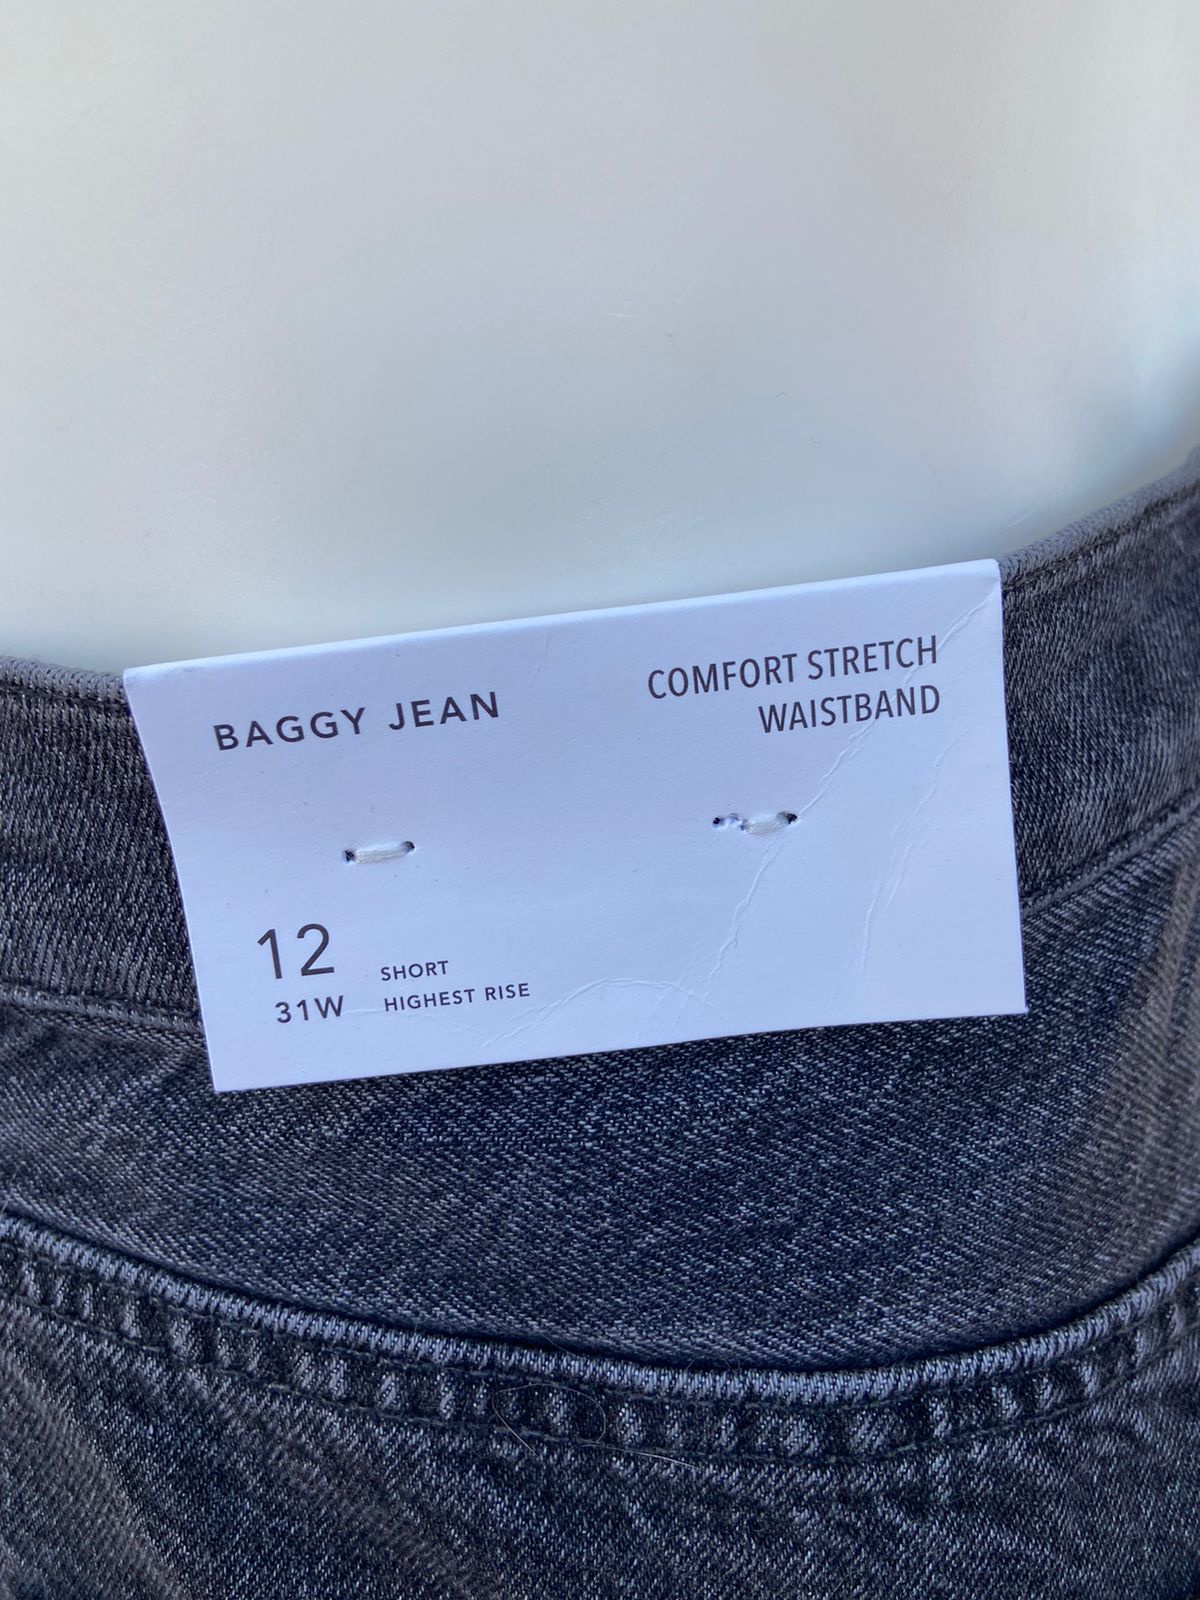 Pantalón Jeans AMERICAN EAGLE original BAGY JEAN COMFORT STRETCH WAISTBAND SHORT HIGHEST RISE.